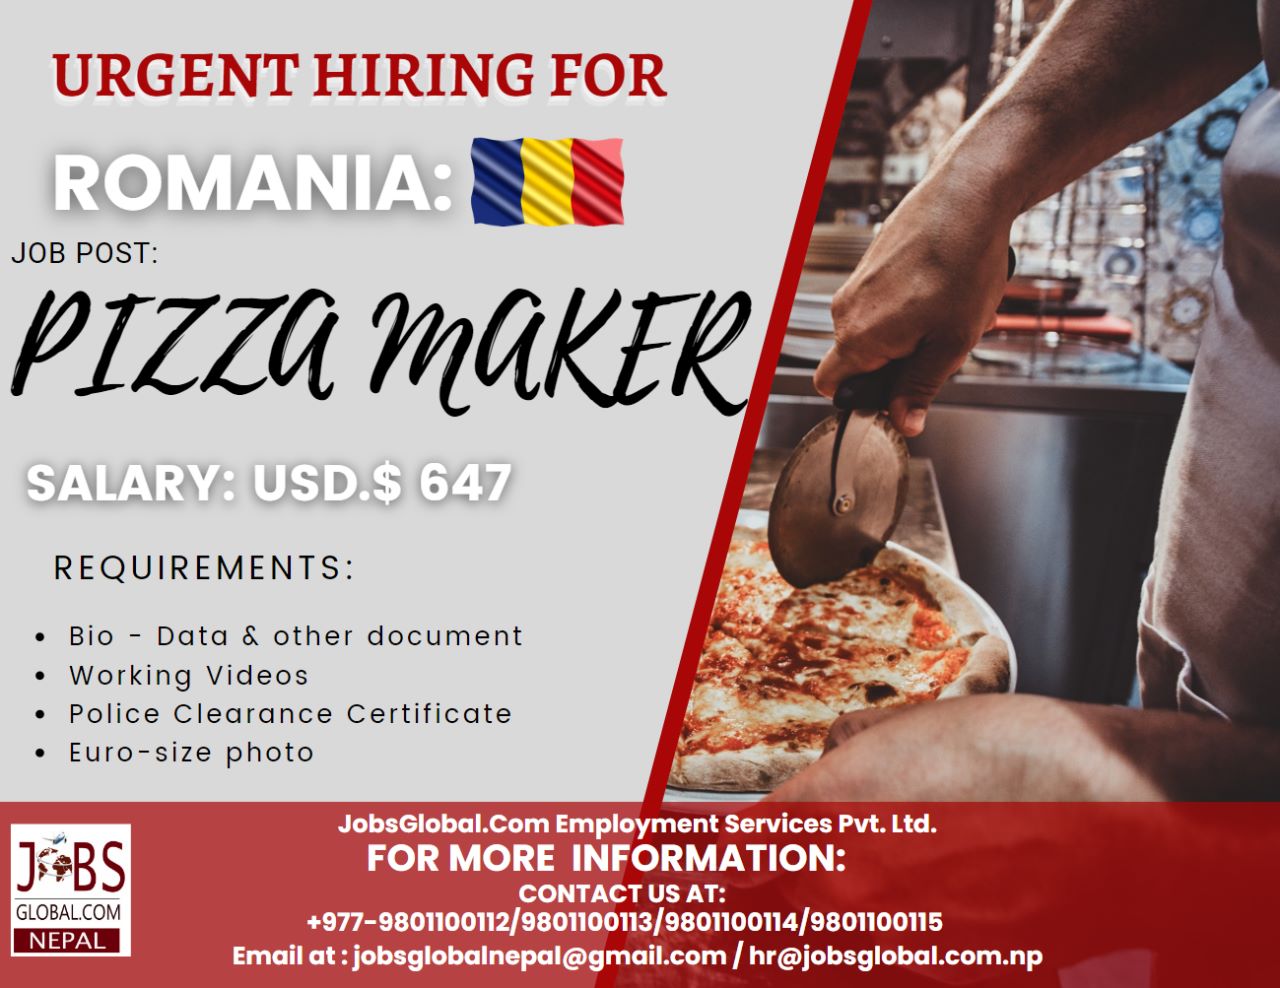 Job Demand From Romania, Job Vacancy for Romania From JobsGlobal. Com Employment NEPAL - Pizza Maker job in Romania